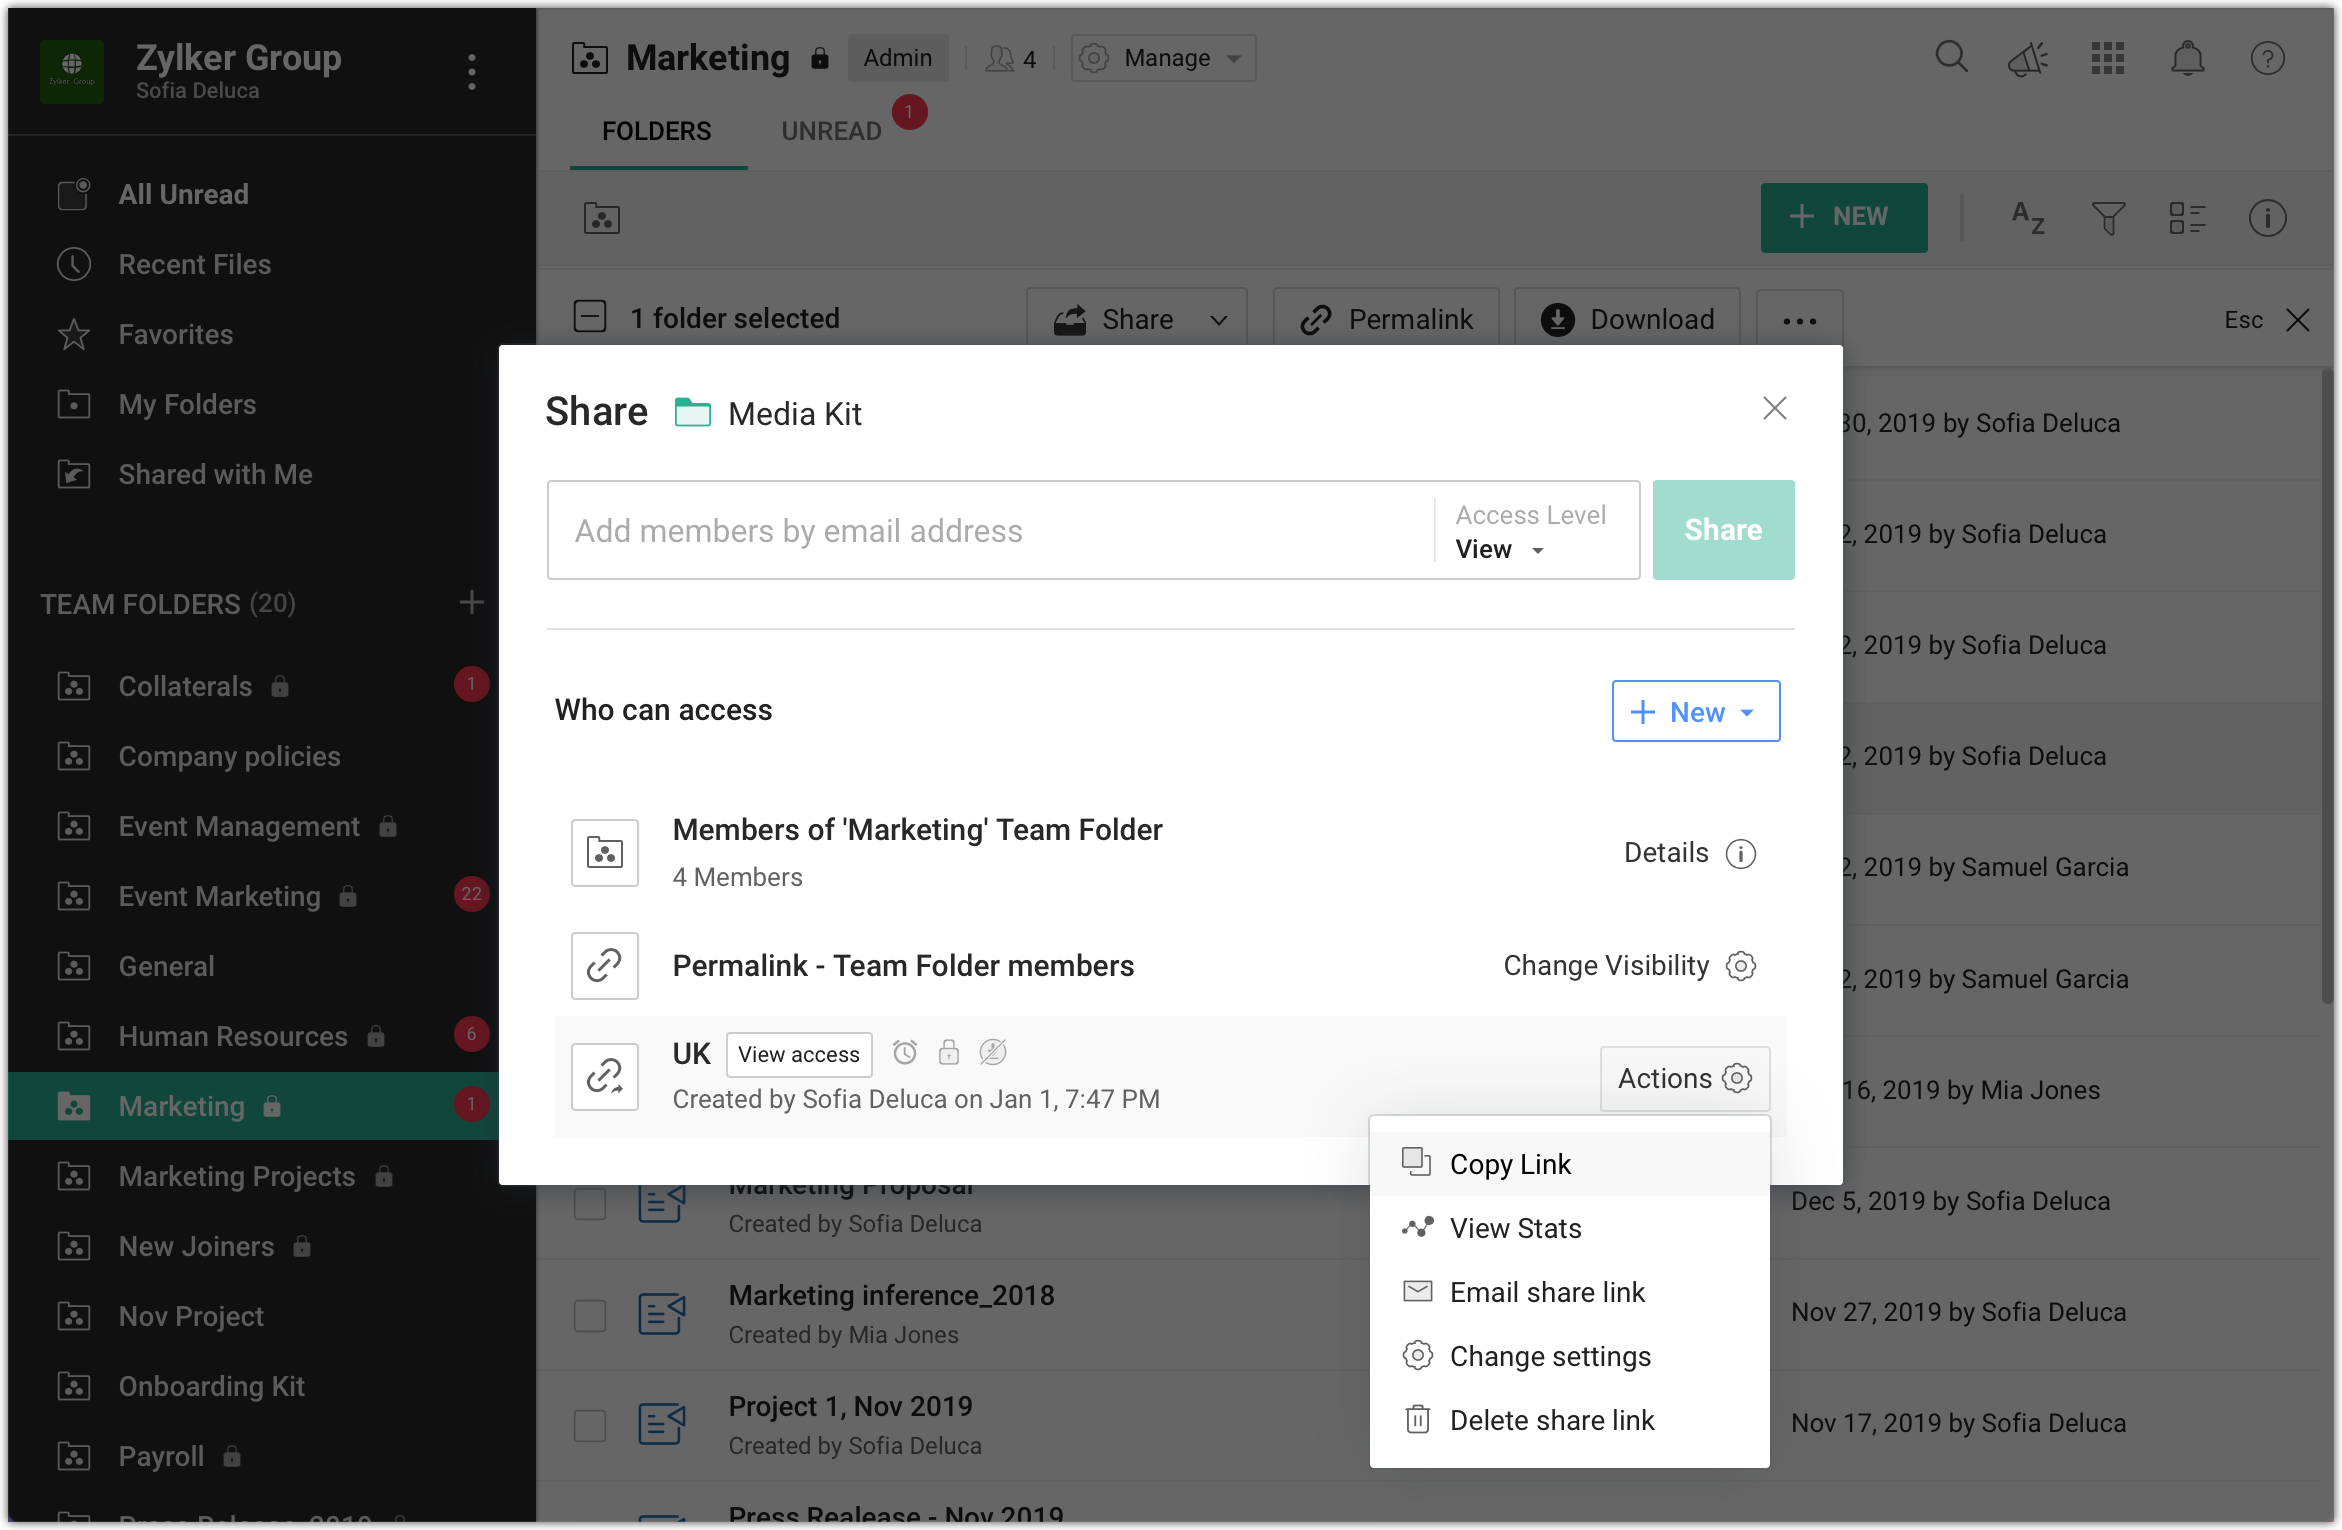 manage share link settings of a folder